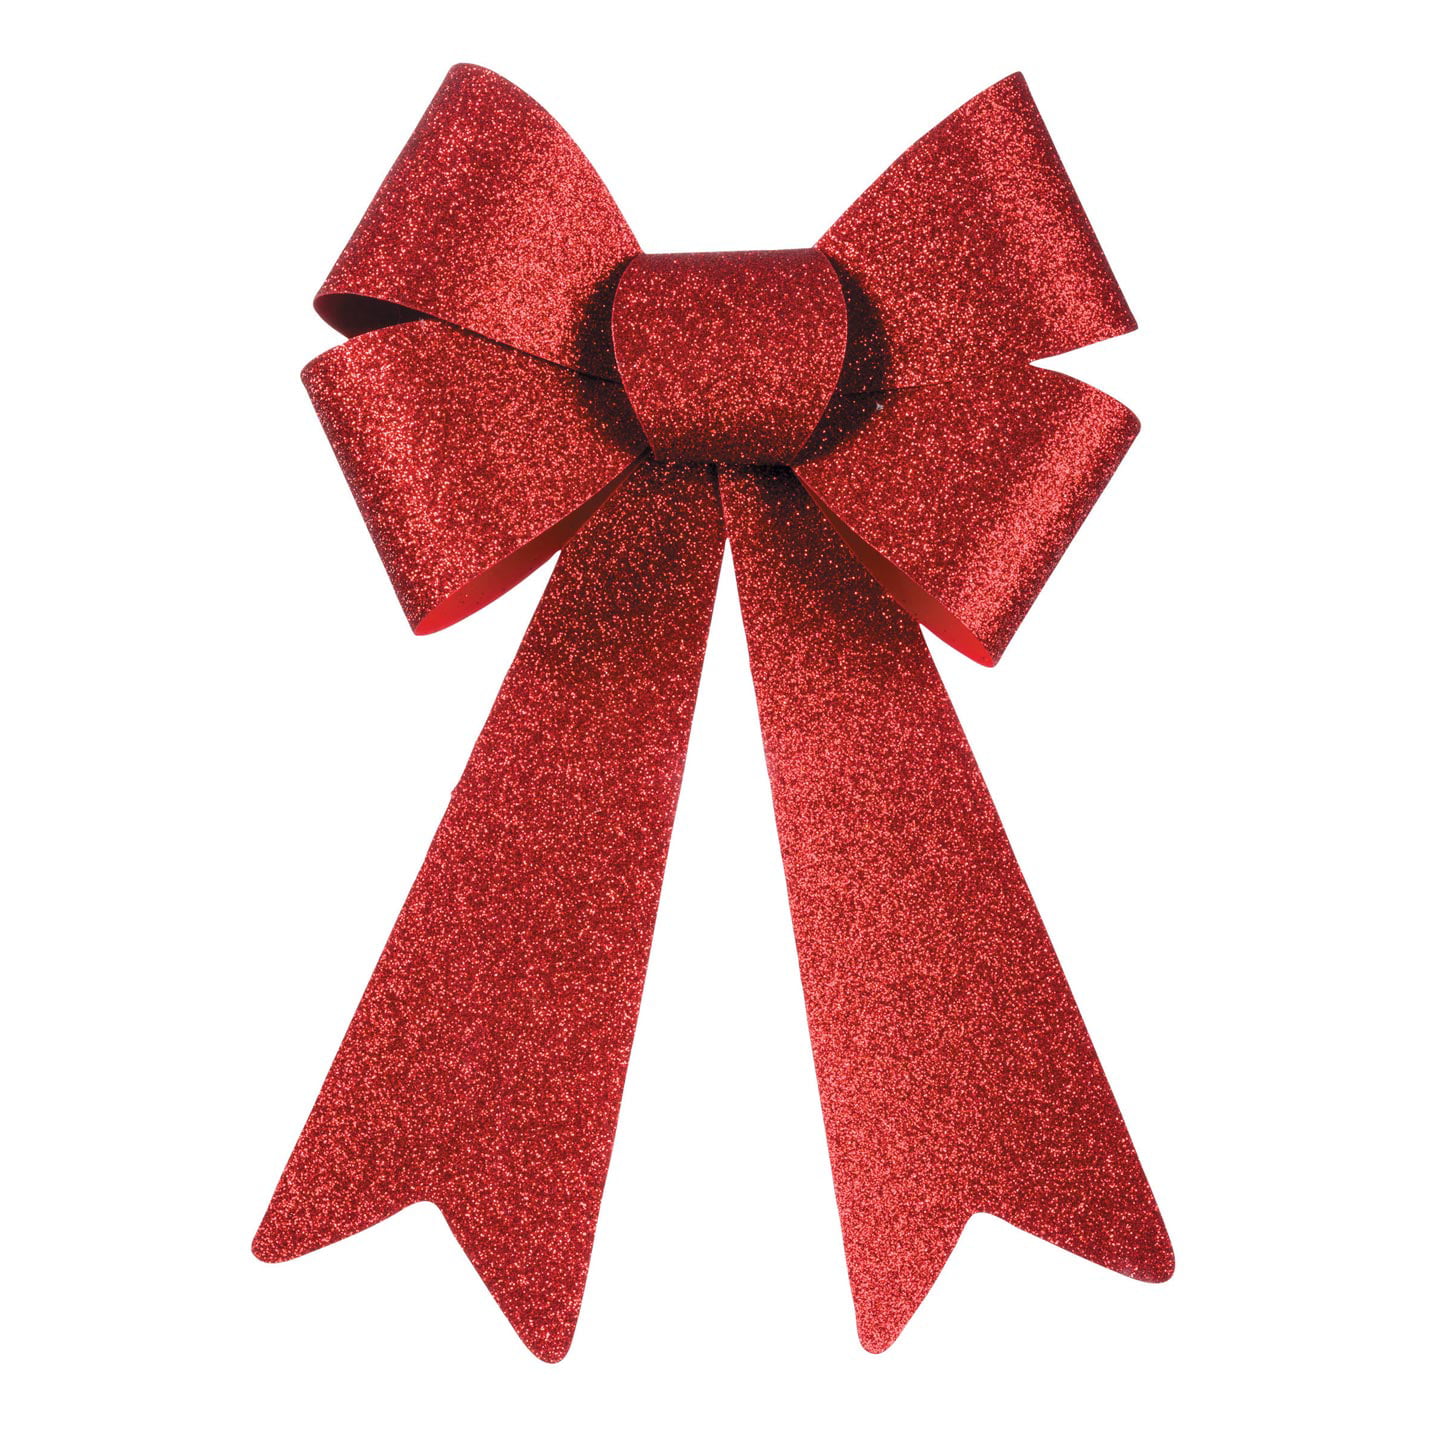 Darice Red Glitter PVC Christmas Bow: 6 x 10 inches - Walmart.com ...